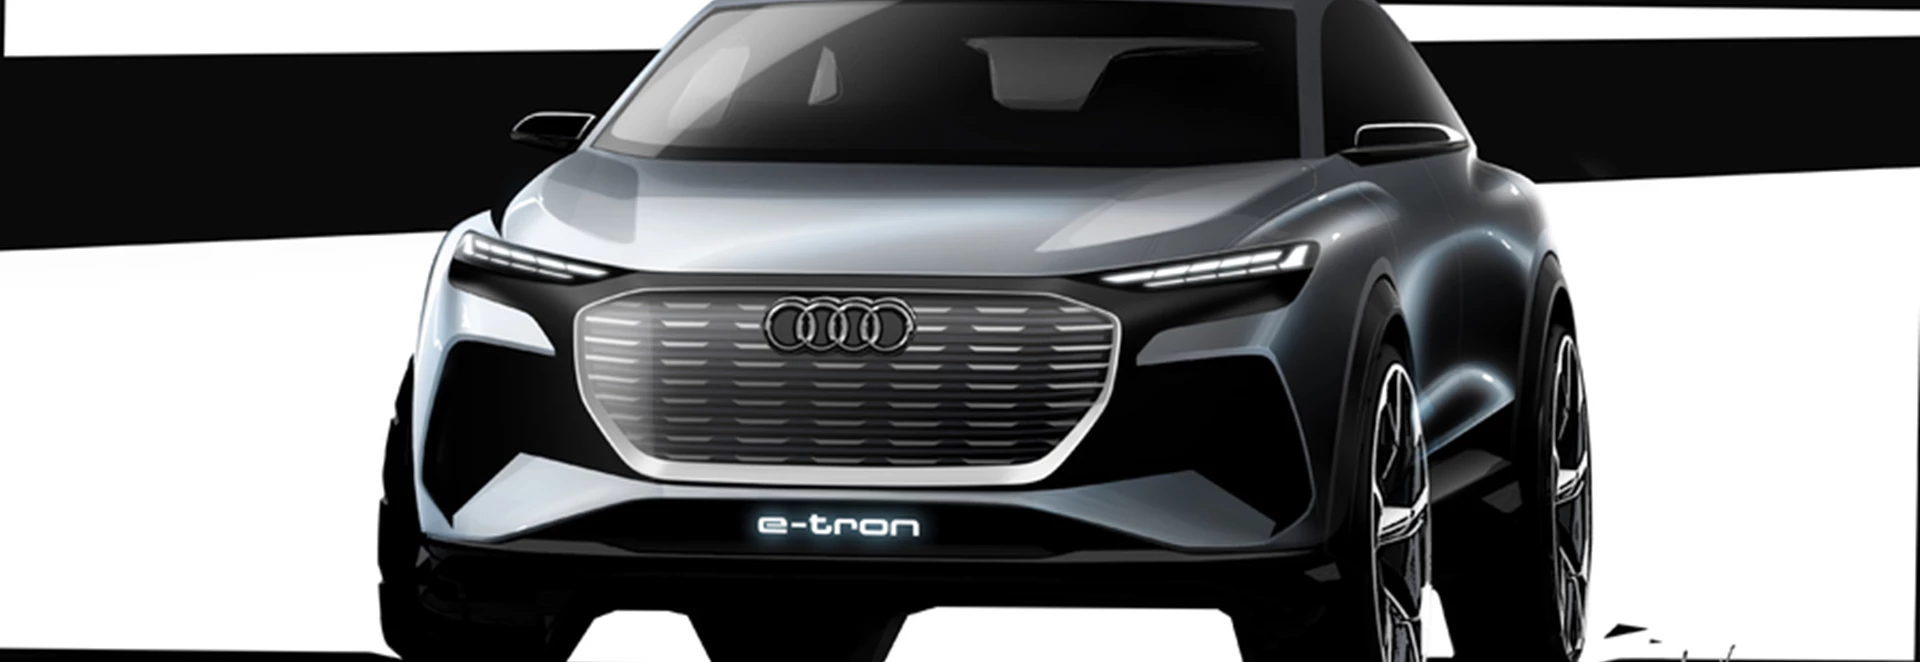 Audi Q4 e-tron teased before debut at Geneva Motor Show